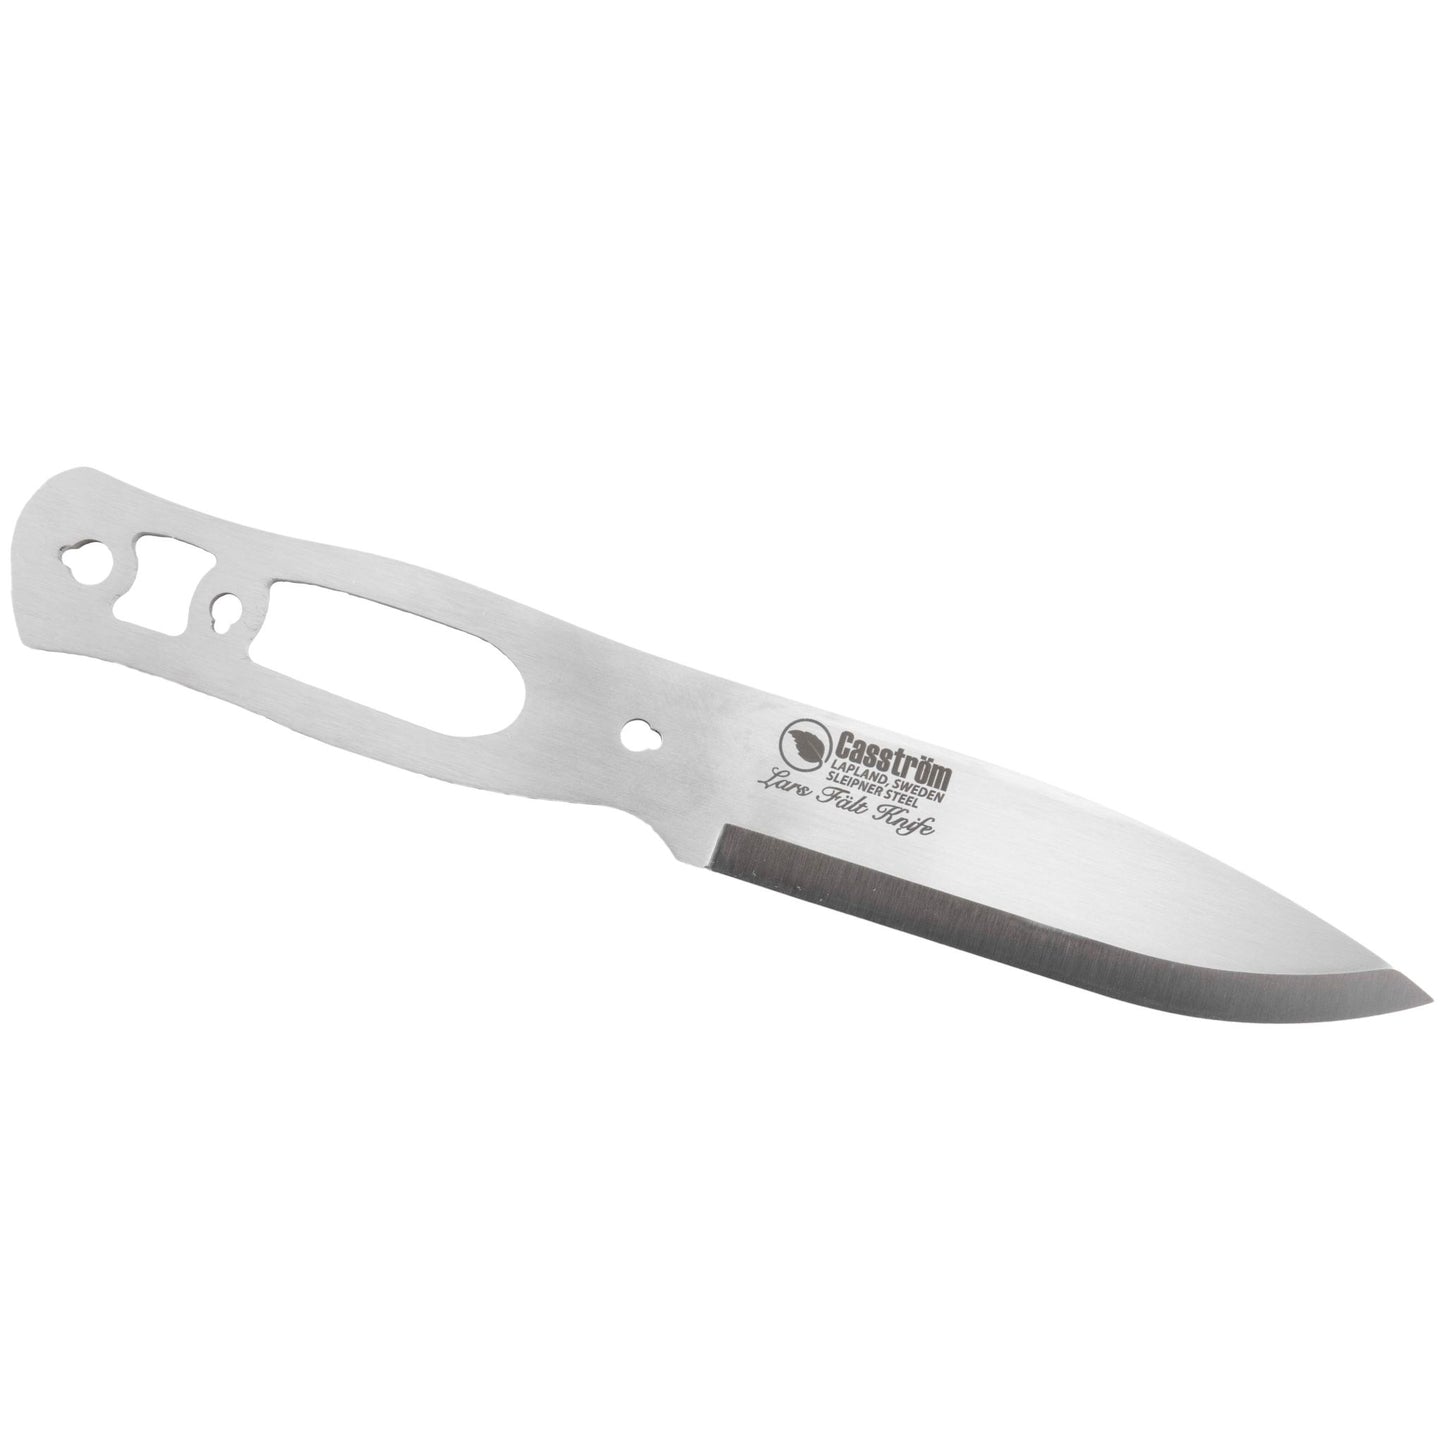 Casström Lars Fält - blade only, so you can make your own knife